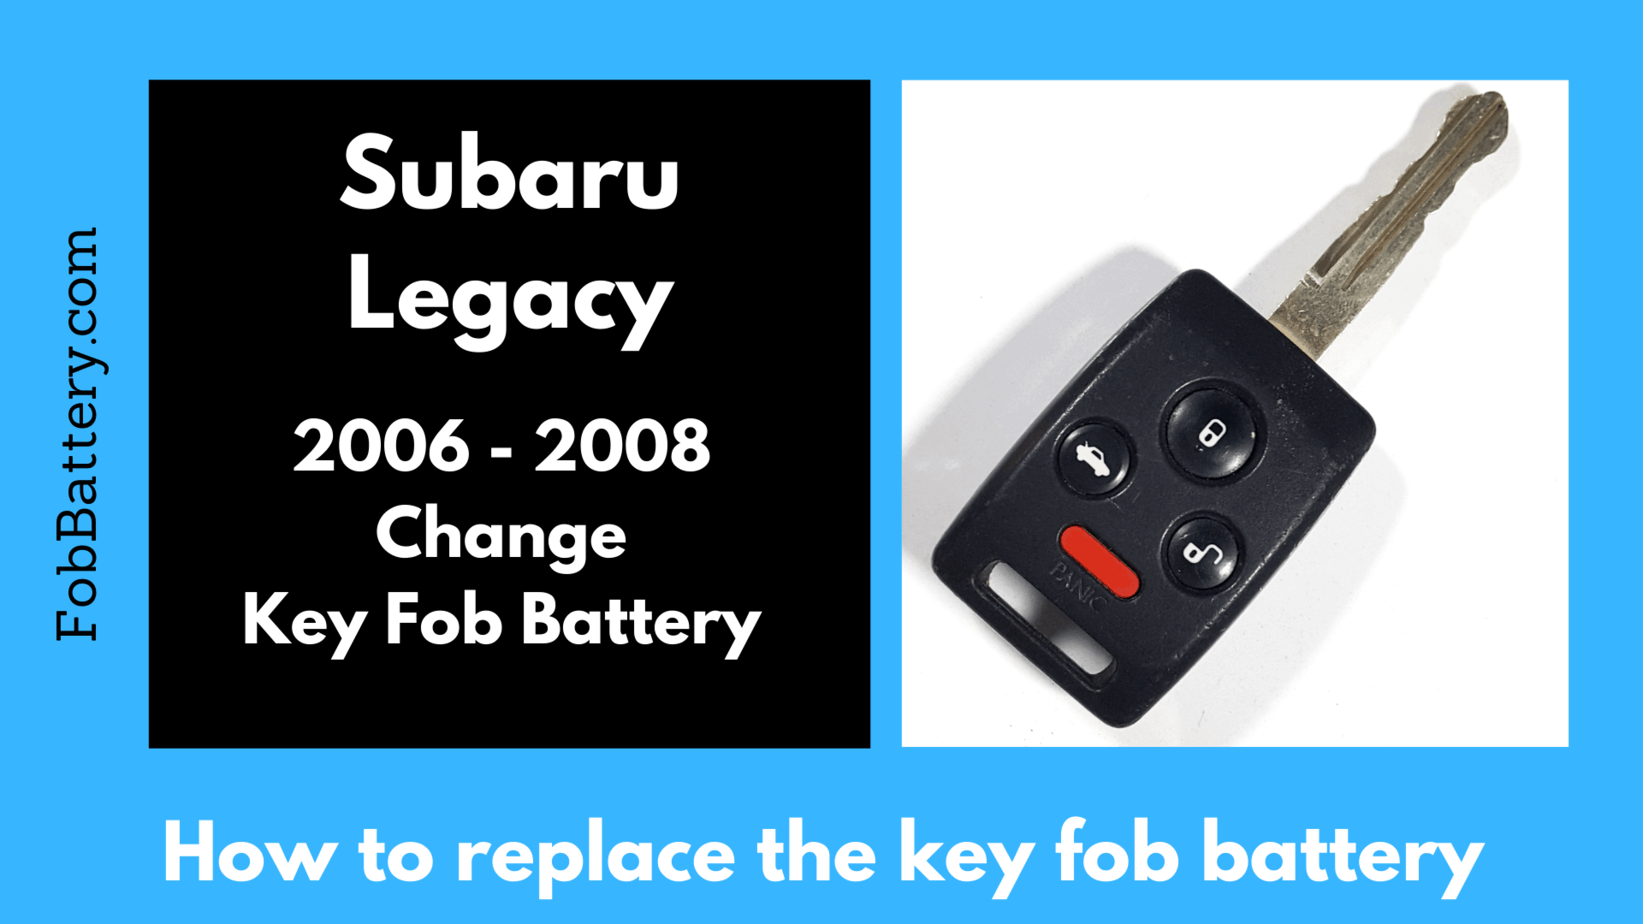 Subaru Legacy key fob battery replacement